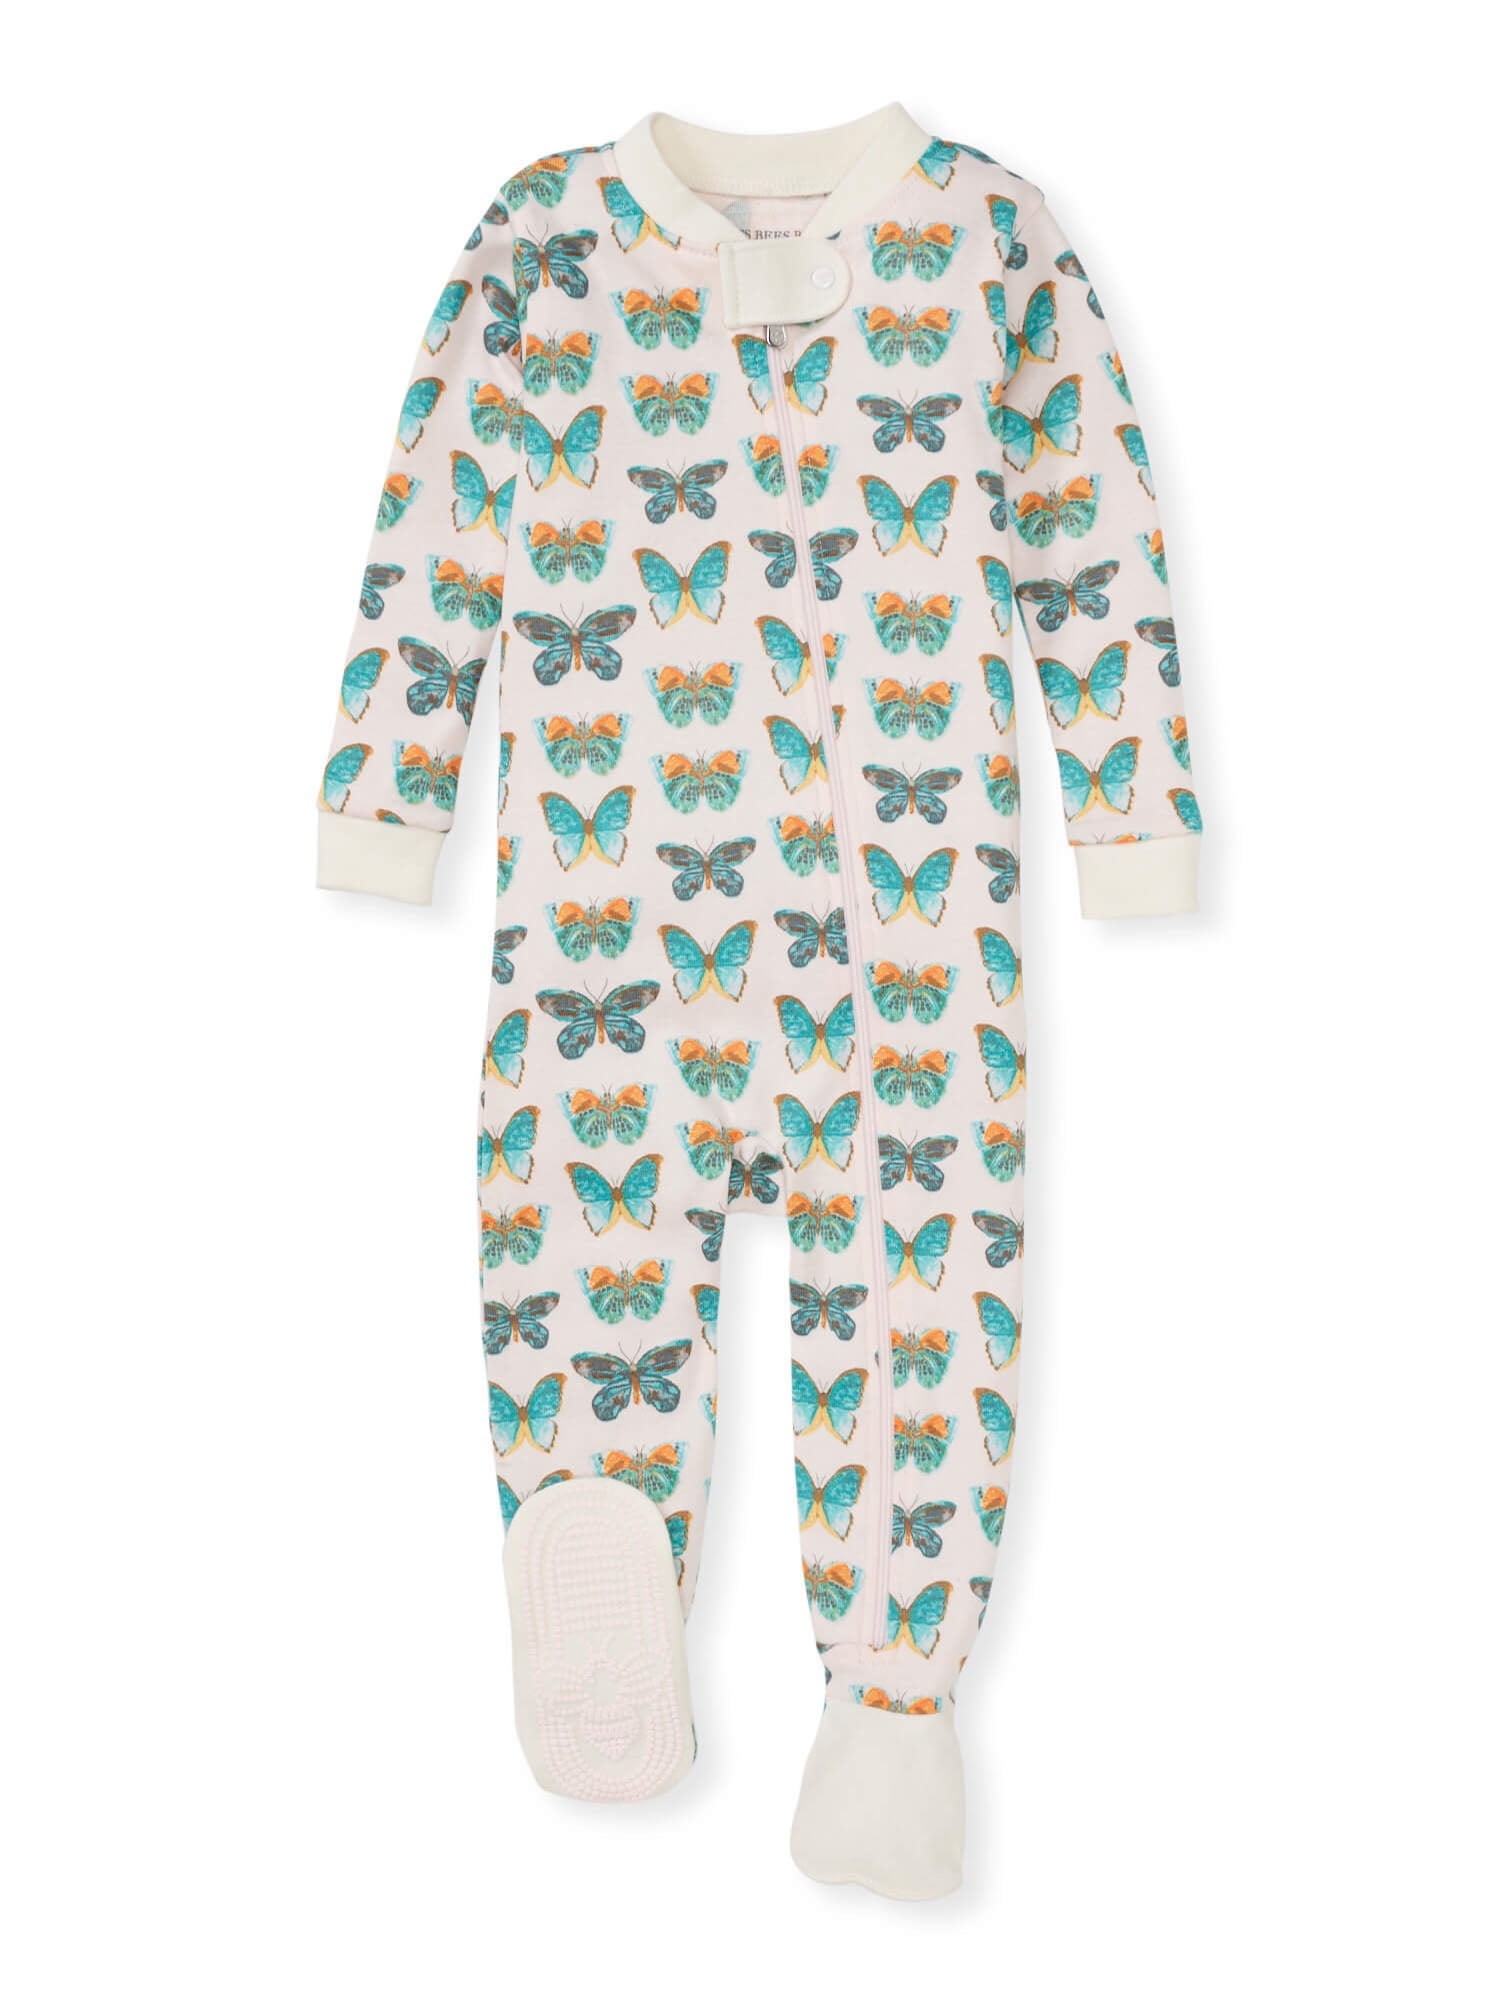 Burts Bees Baby Girls Pajamas Zip Front Non-Slip Footed Sleeper Pjs 100% Organic Cotton